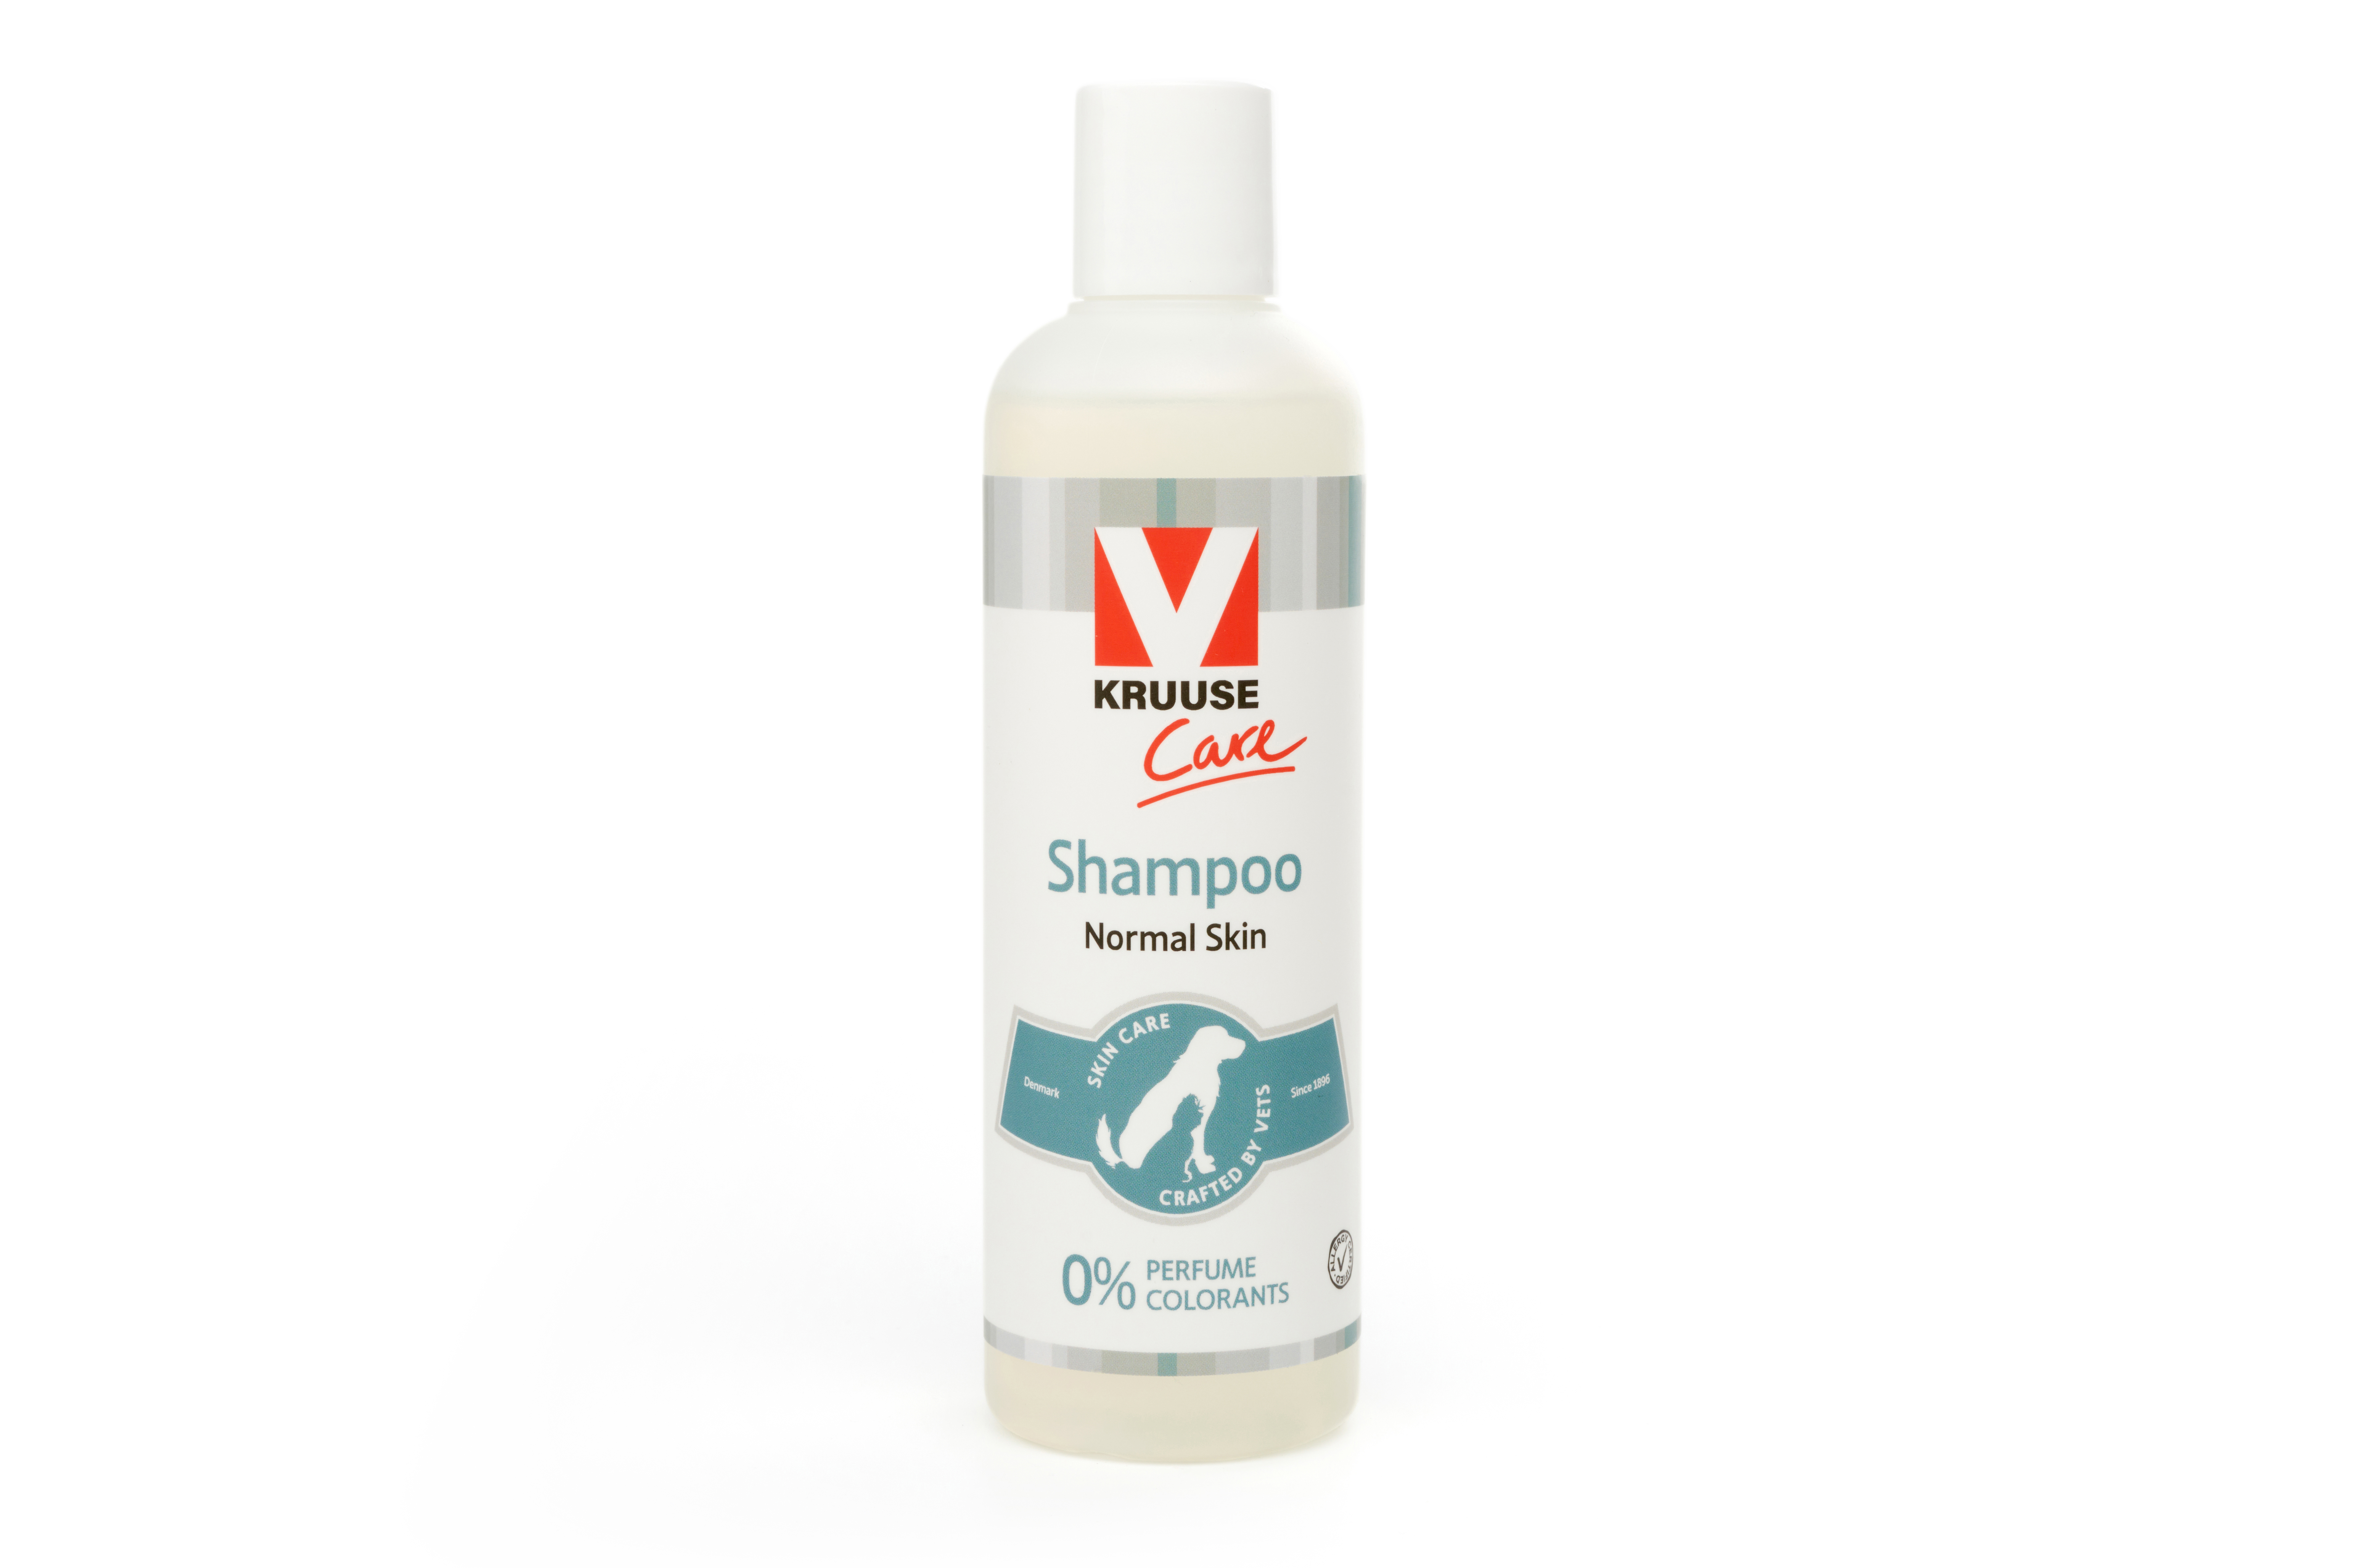 KRUUSE Care Normal Skin Shampoo, 250 ml